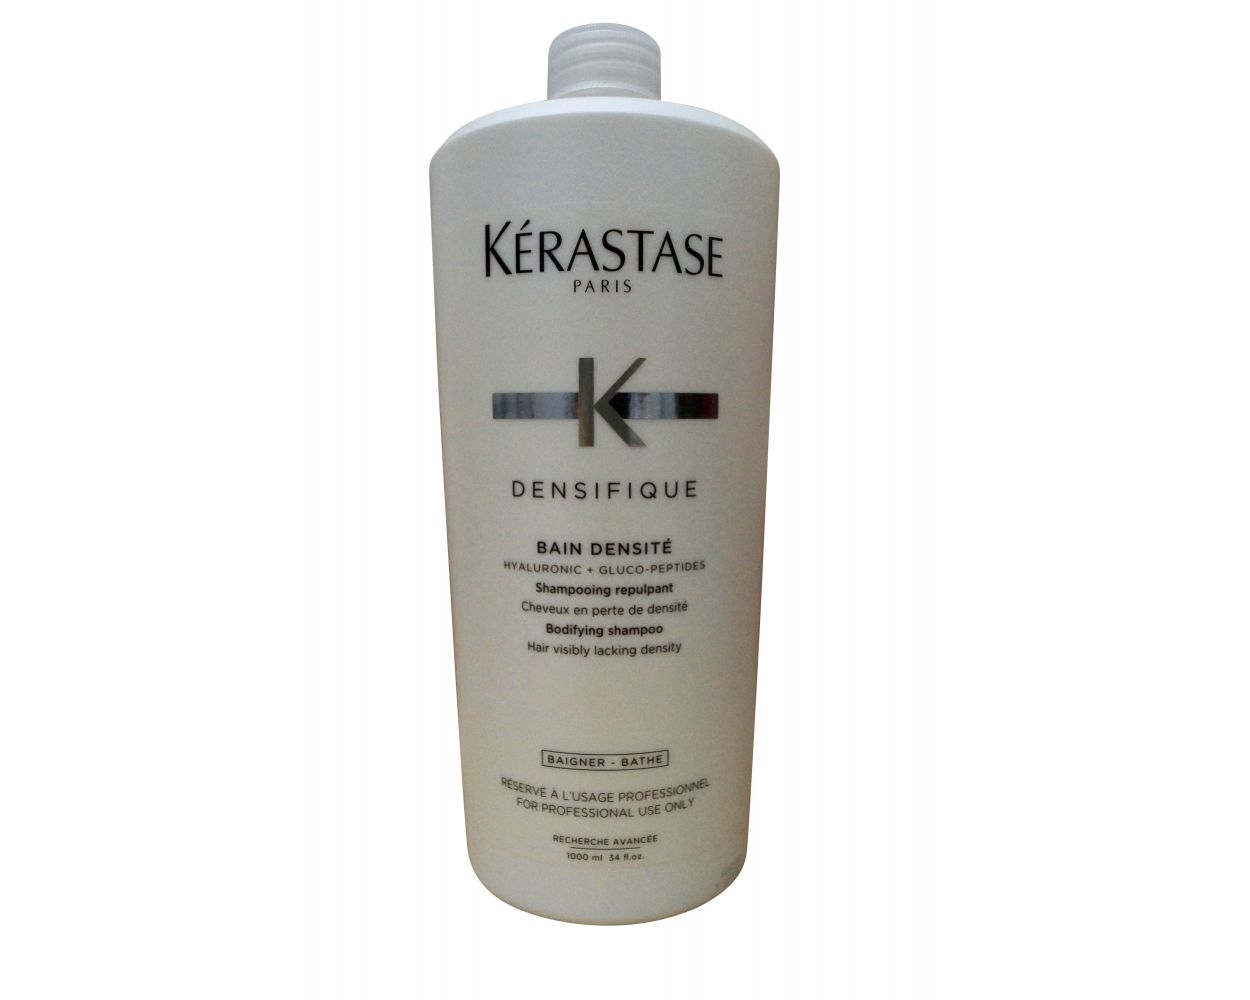 Kerastase Densifique Bain Densite Bodifying Shampoo Fine Hair 33.8 oz. | Shampoo Beautyvice.com